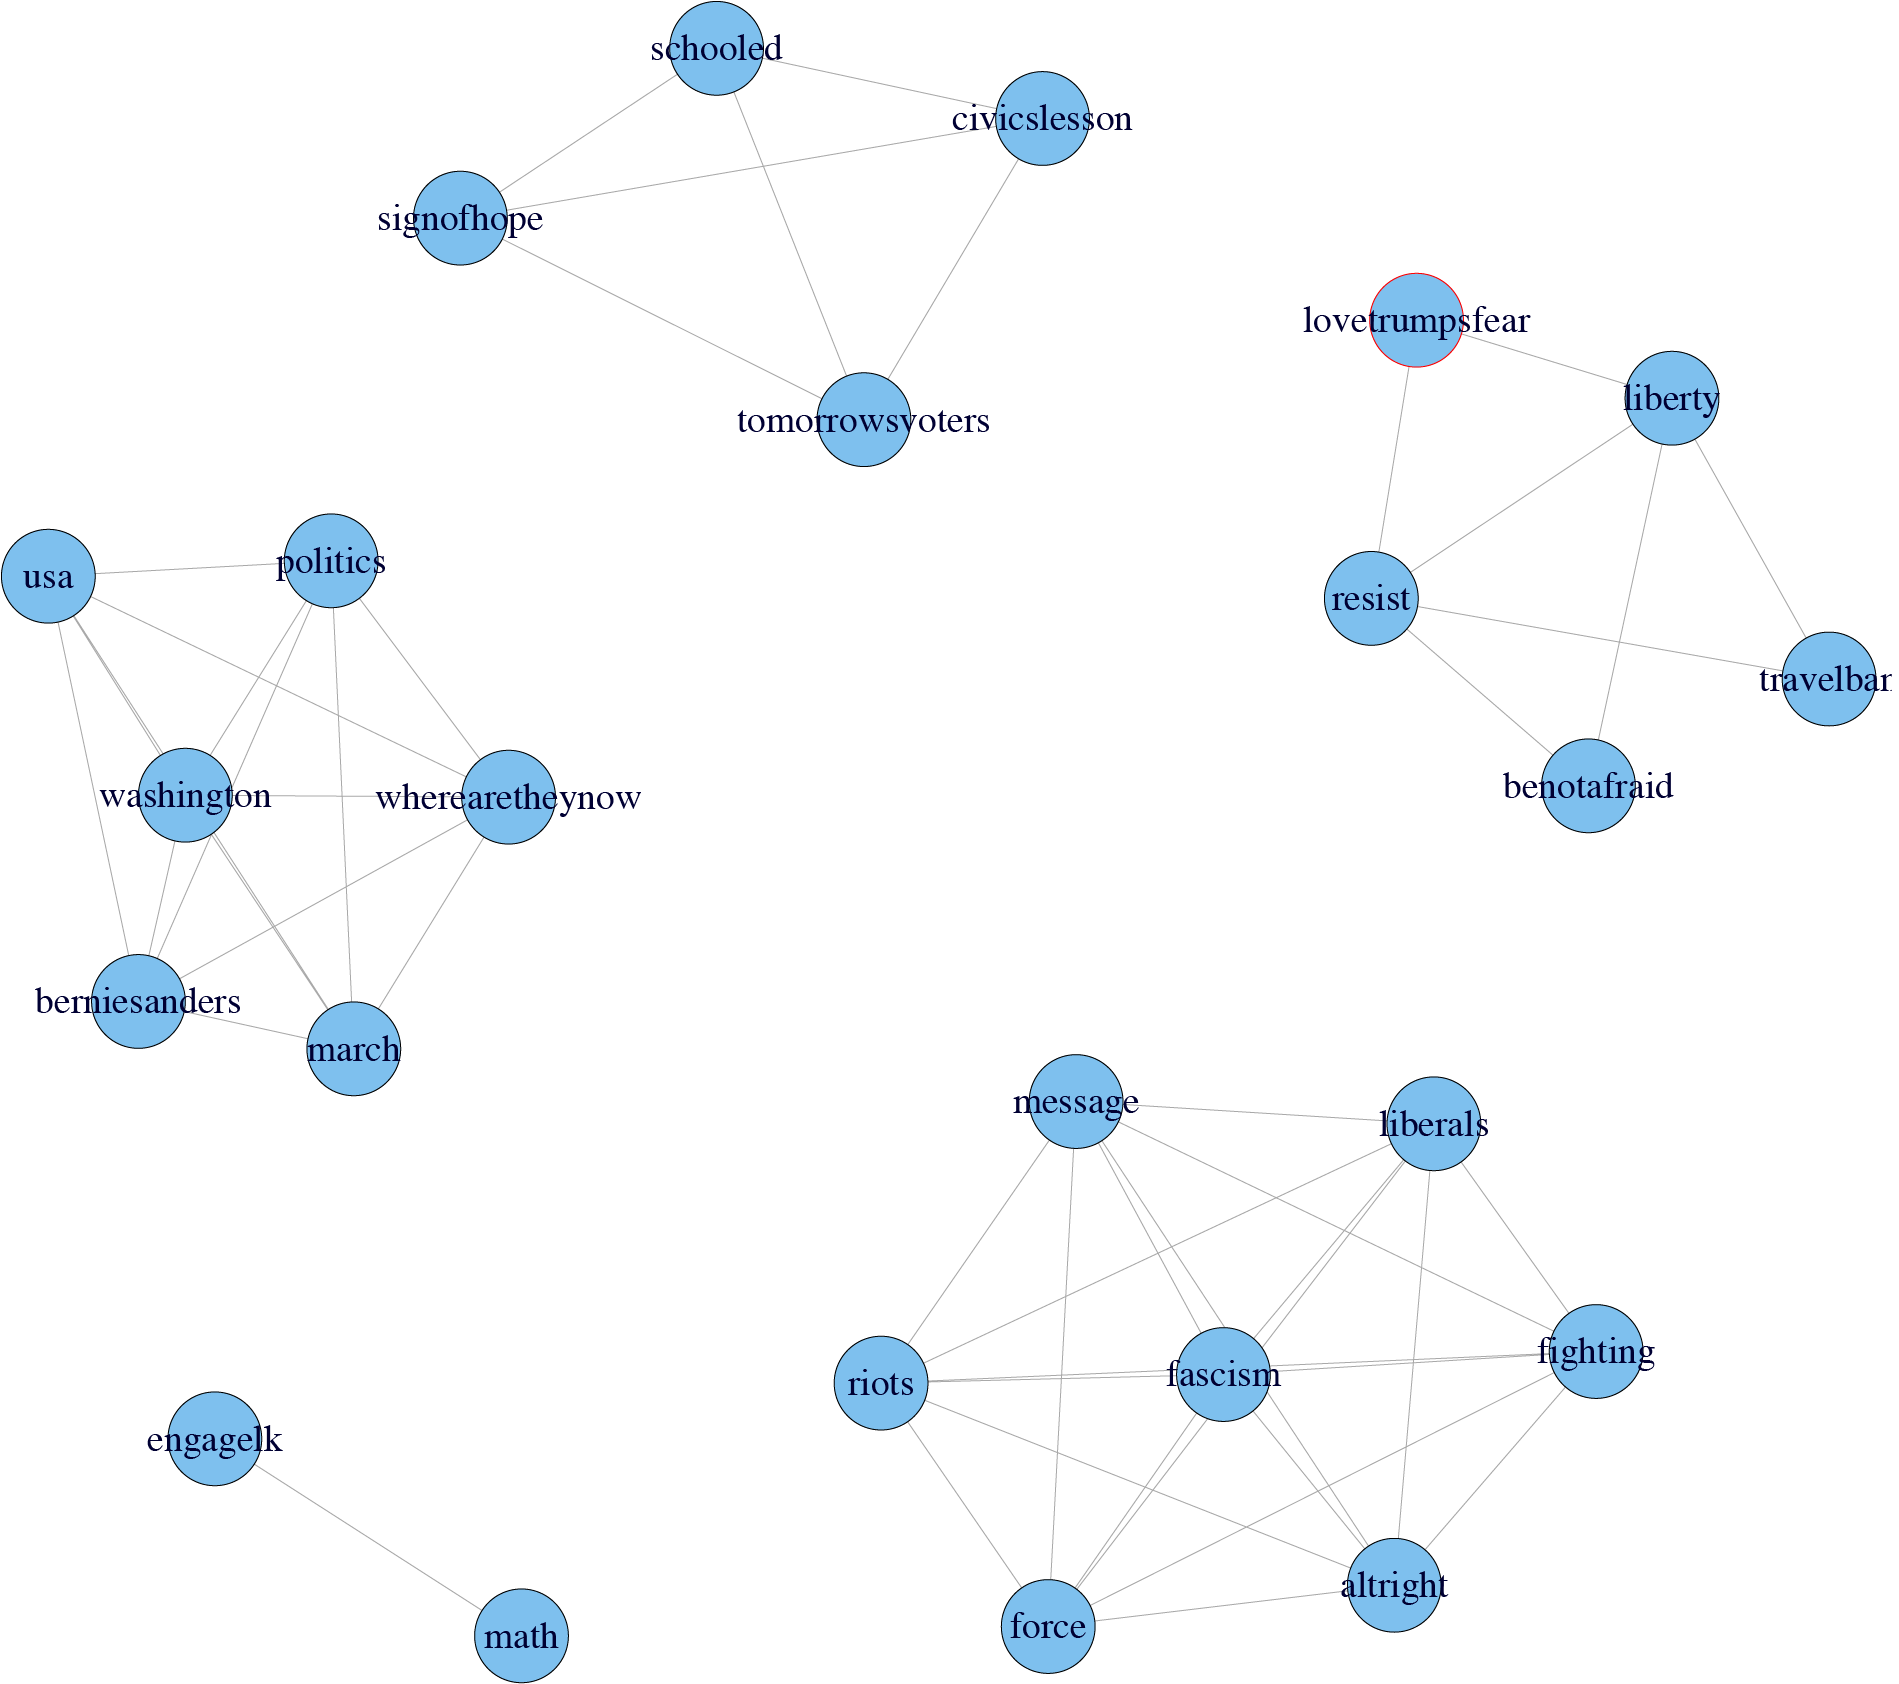 discursus.io - Topic Extract - Network Analysis